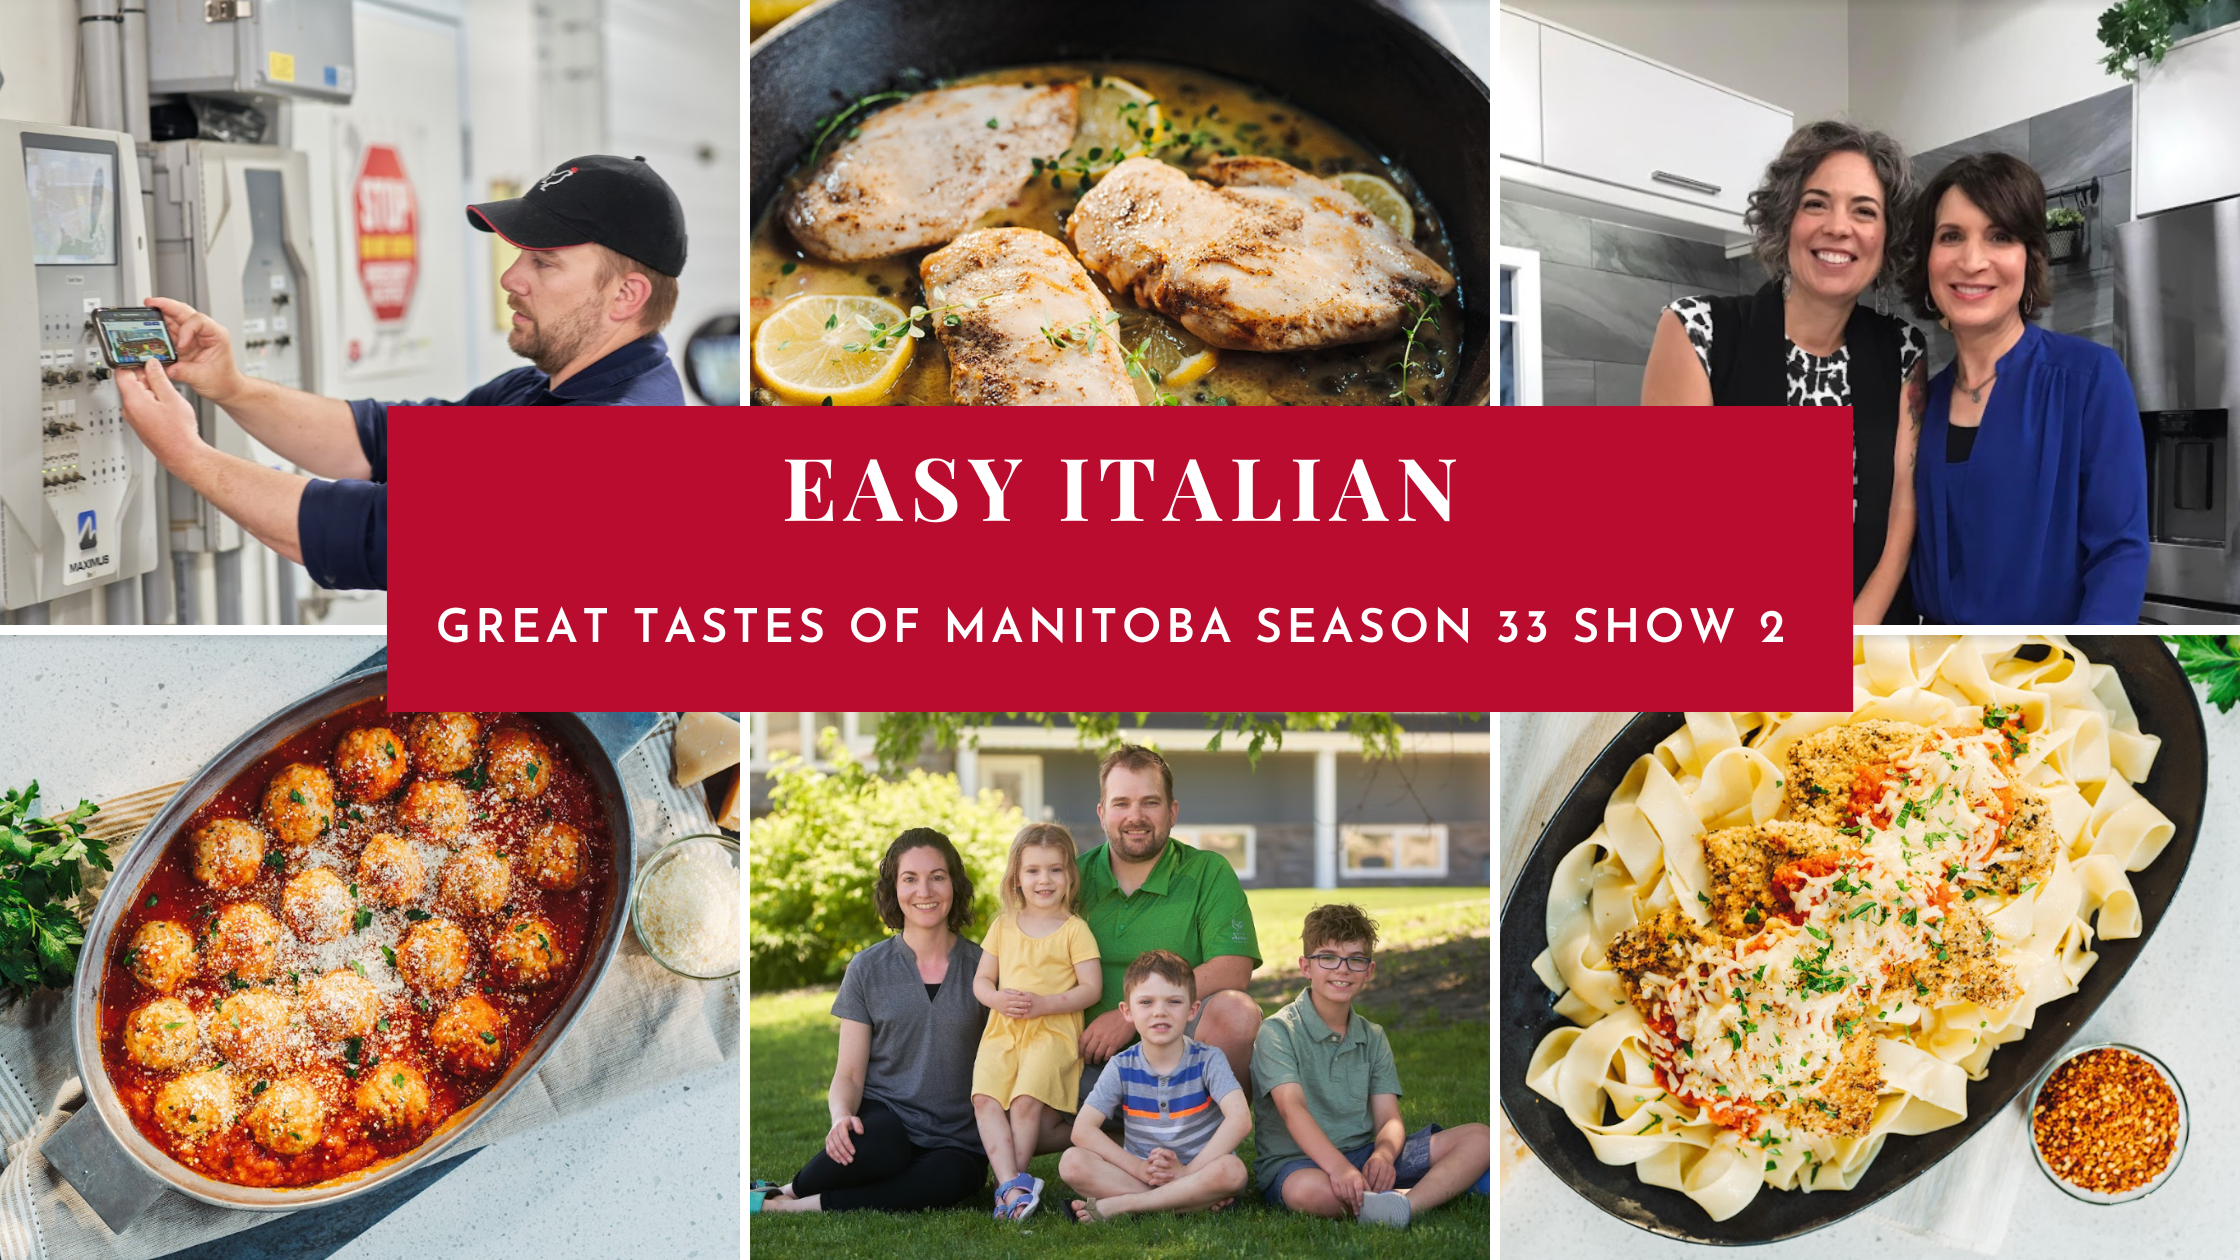 Great Tastes of Manitoba | Easy Italian | Season 33